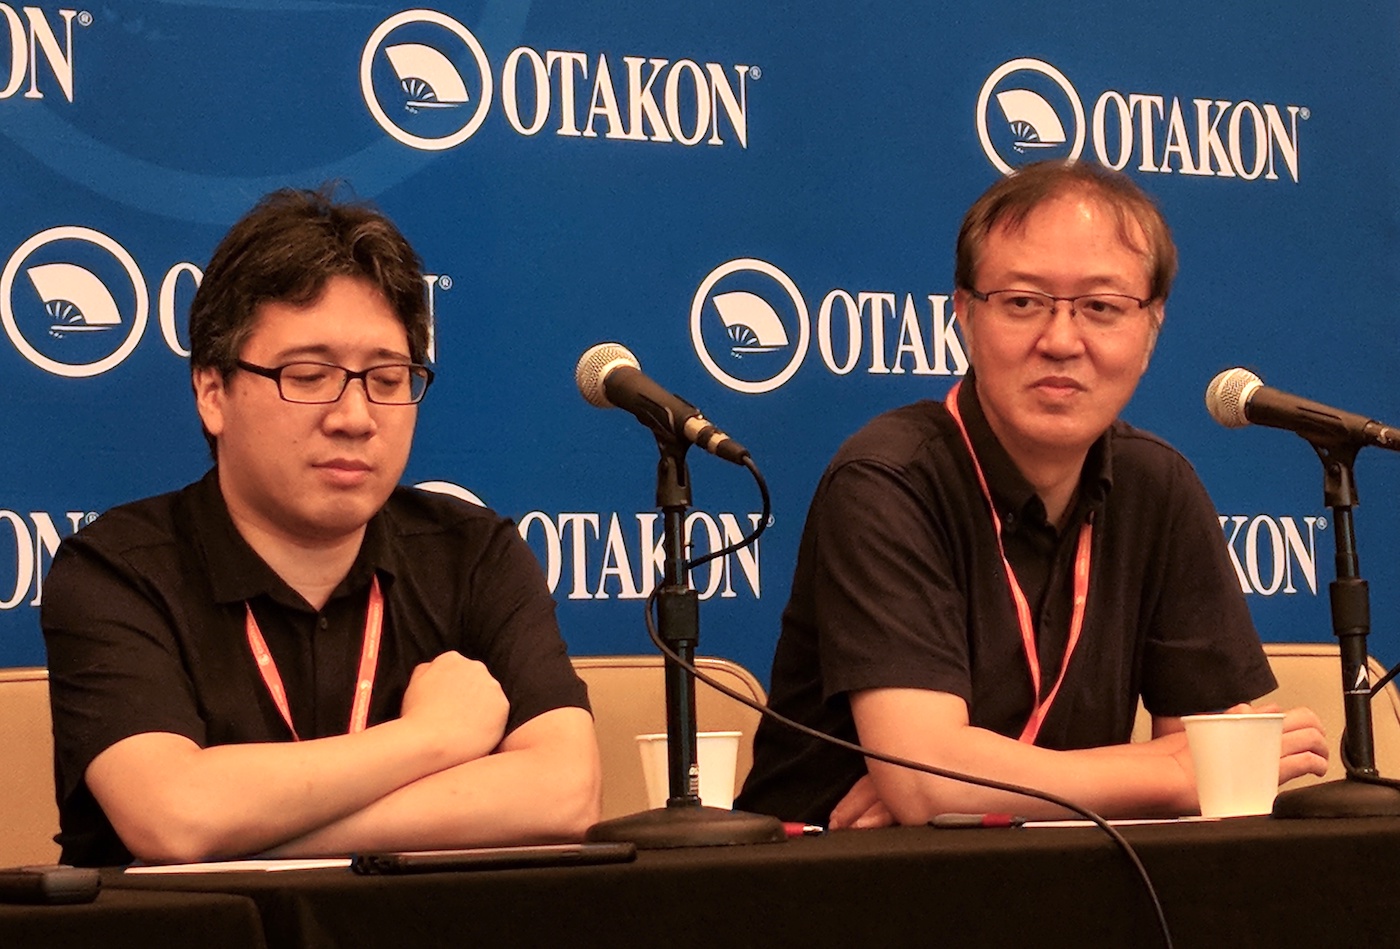 Yoshinari and Otsuka sitting in front of an Otakon banner, thinking